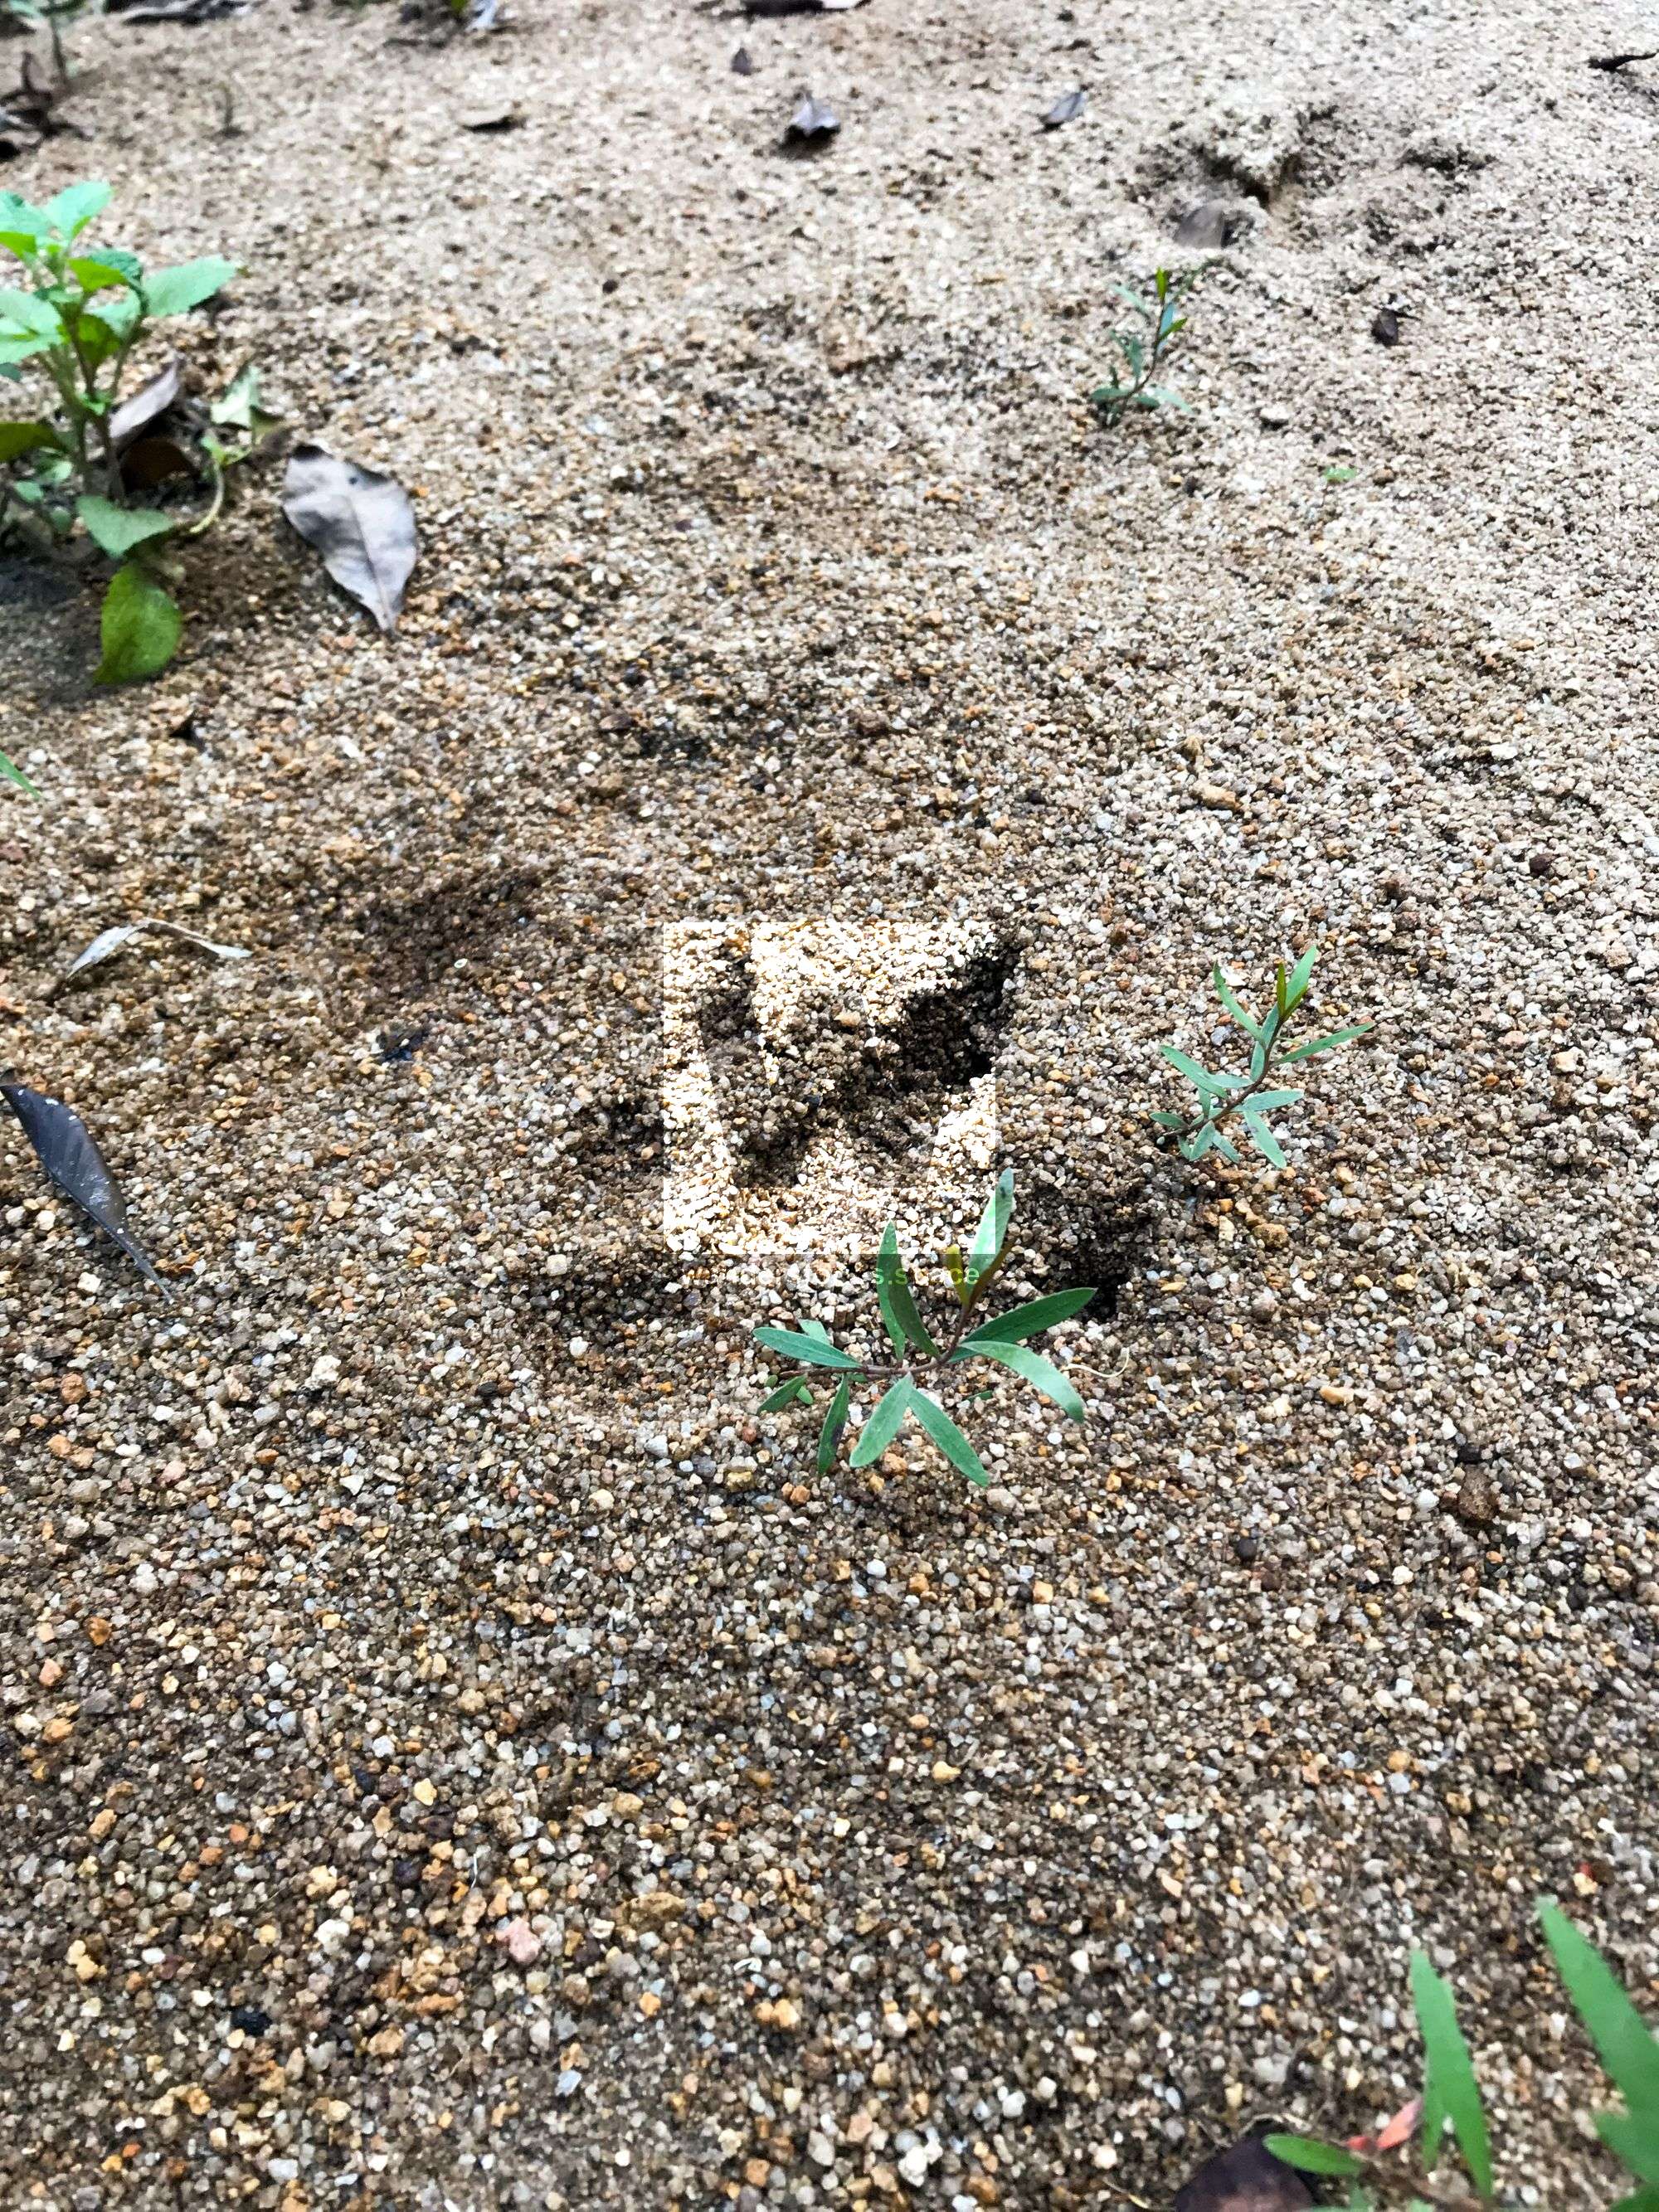 raspberry falls track cassowary footprint